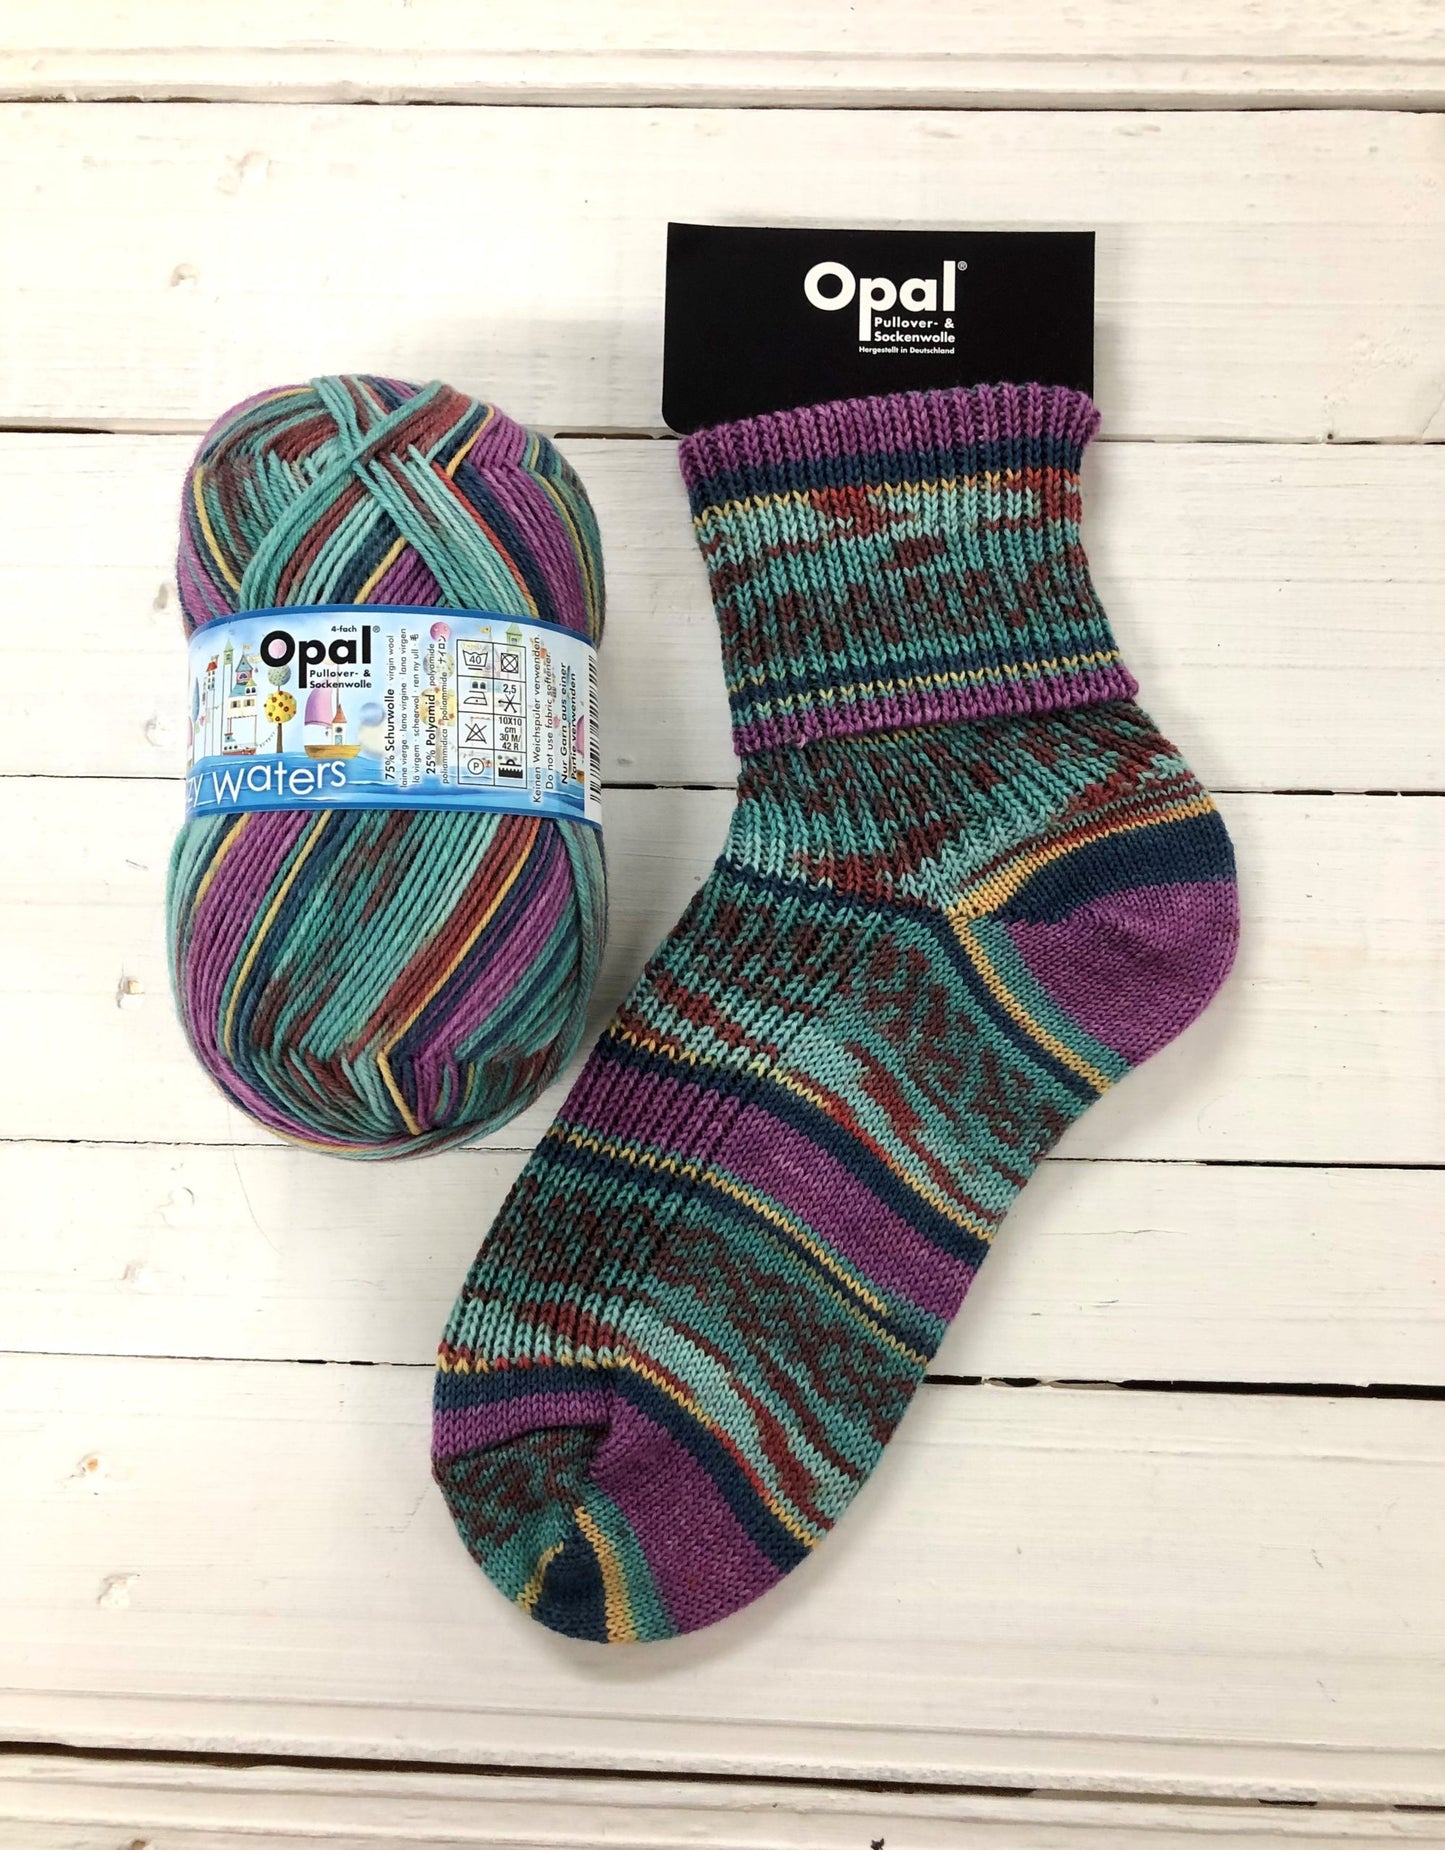 11310 - Purple, teal, dark blue, maroon and pastel yellow self-striping sock